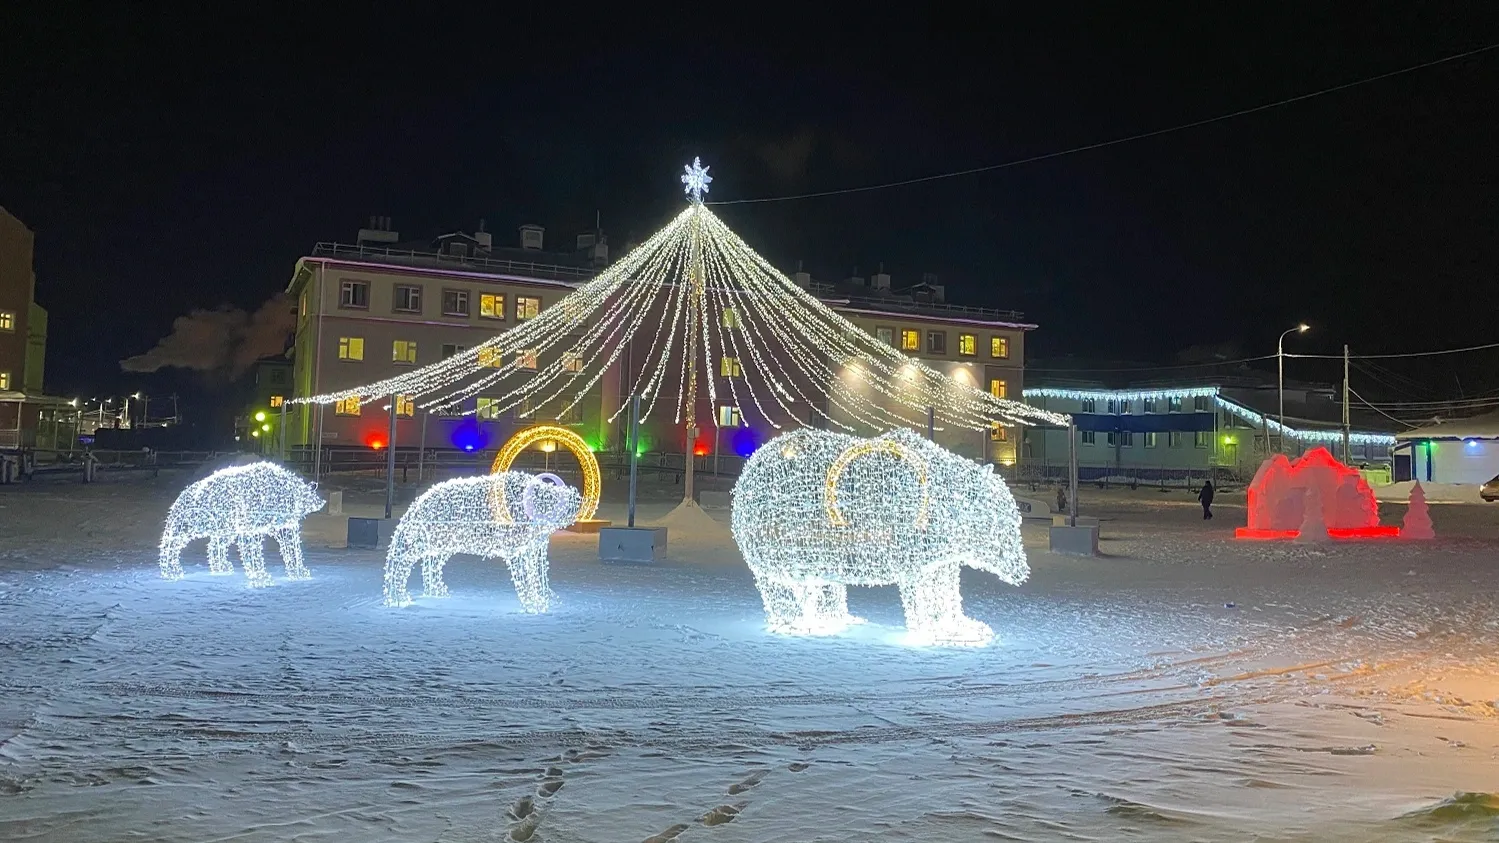 Светящиеся белые медведи снова украсят новогодние площадки. Фото: Анастасия Ульянова / "Ямал-Медиа"